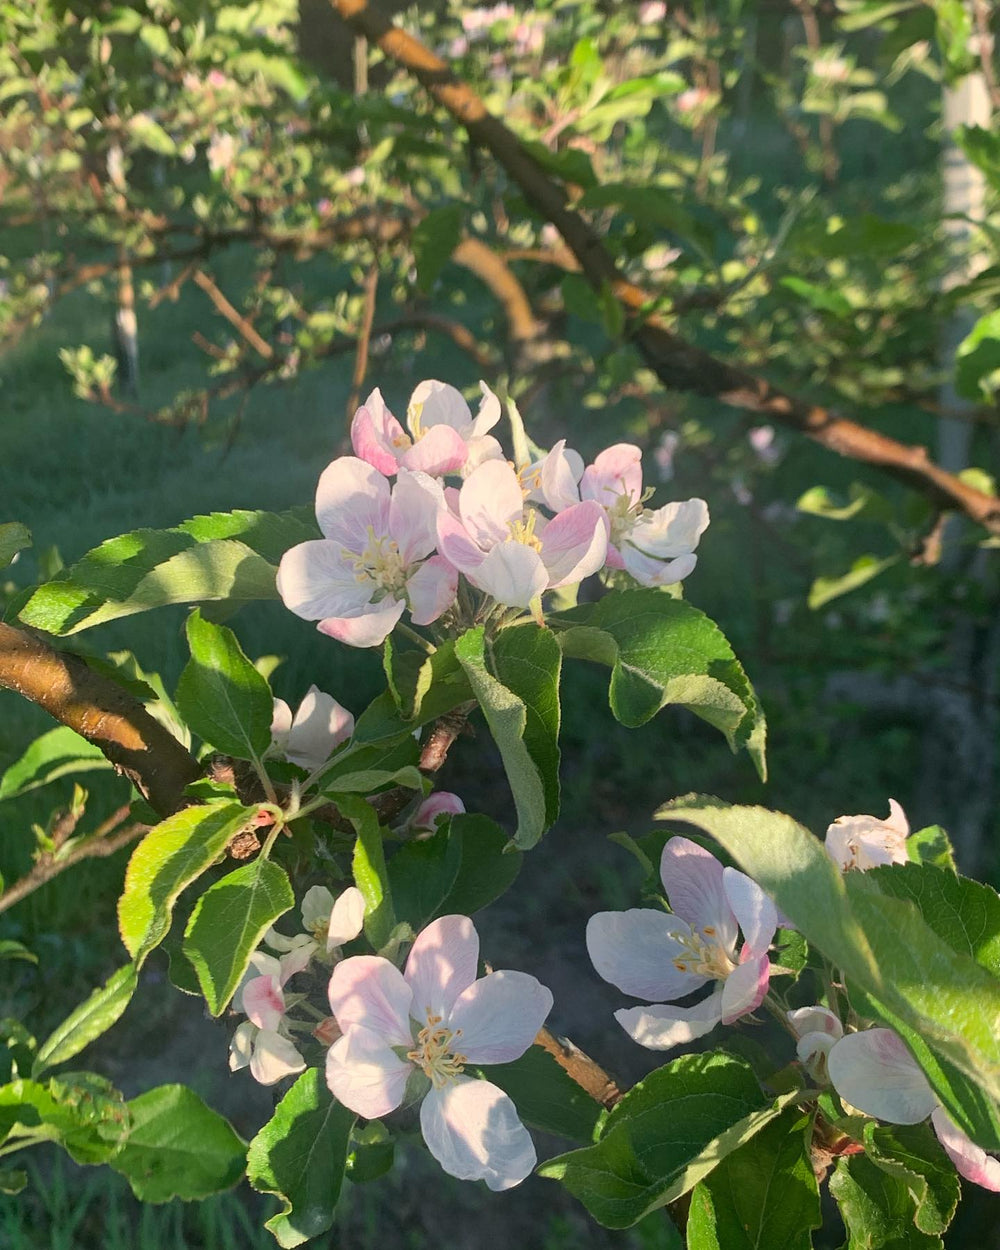 Fuji Apple Tree – Green Thumbs Garden